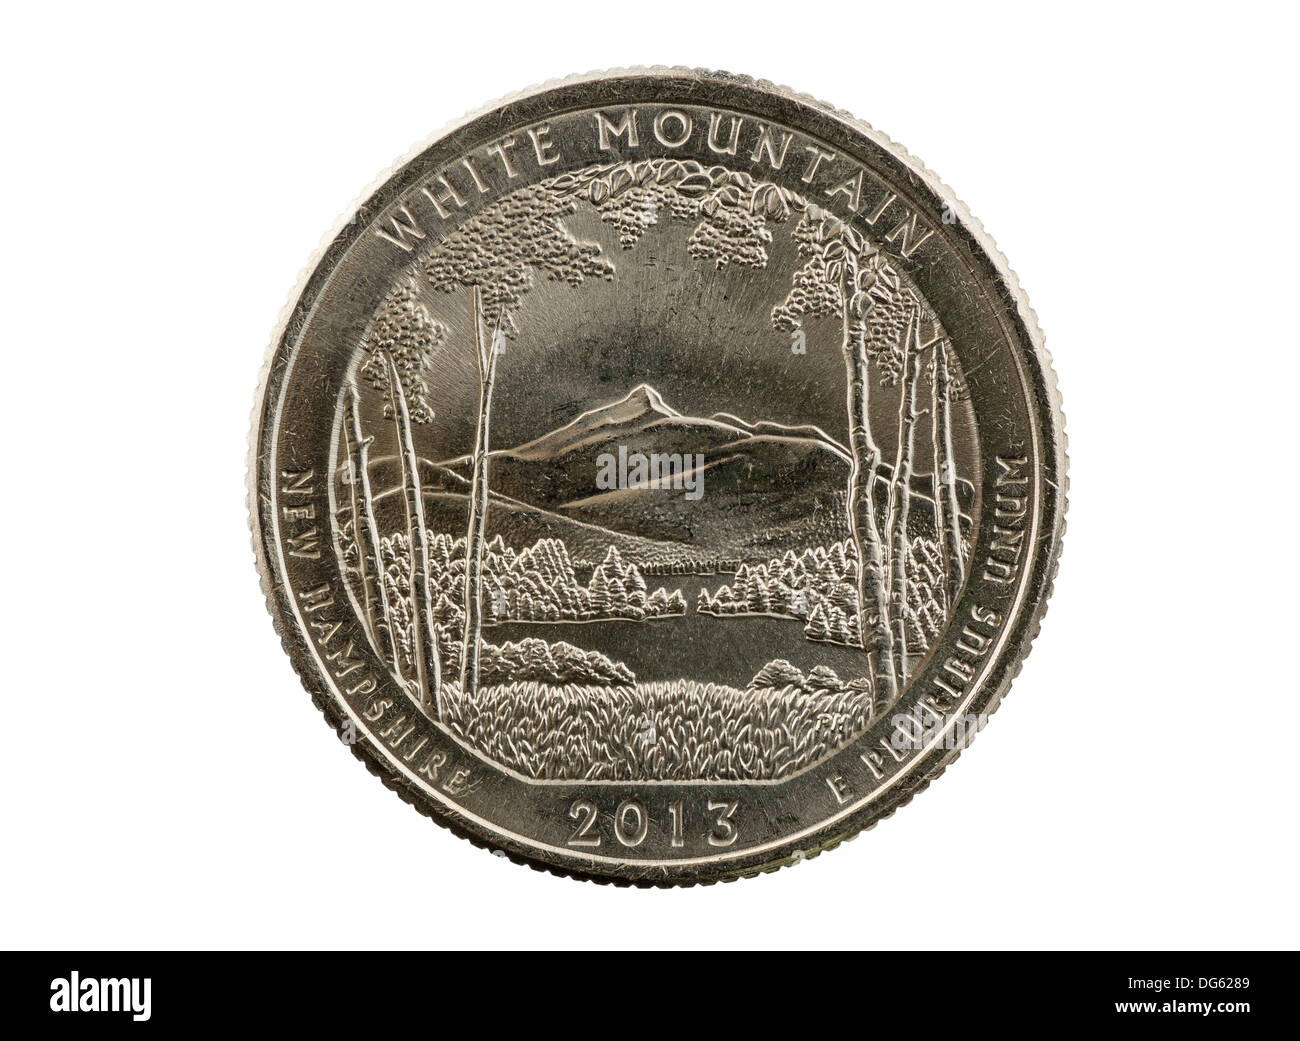 La Montagne Blanche New Hampshire trimestre commémorative coin isolated on white Banque D'Images